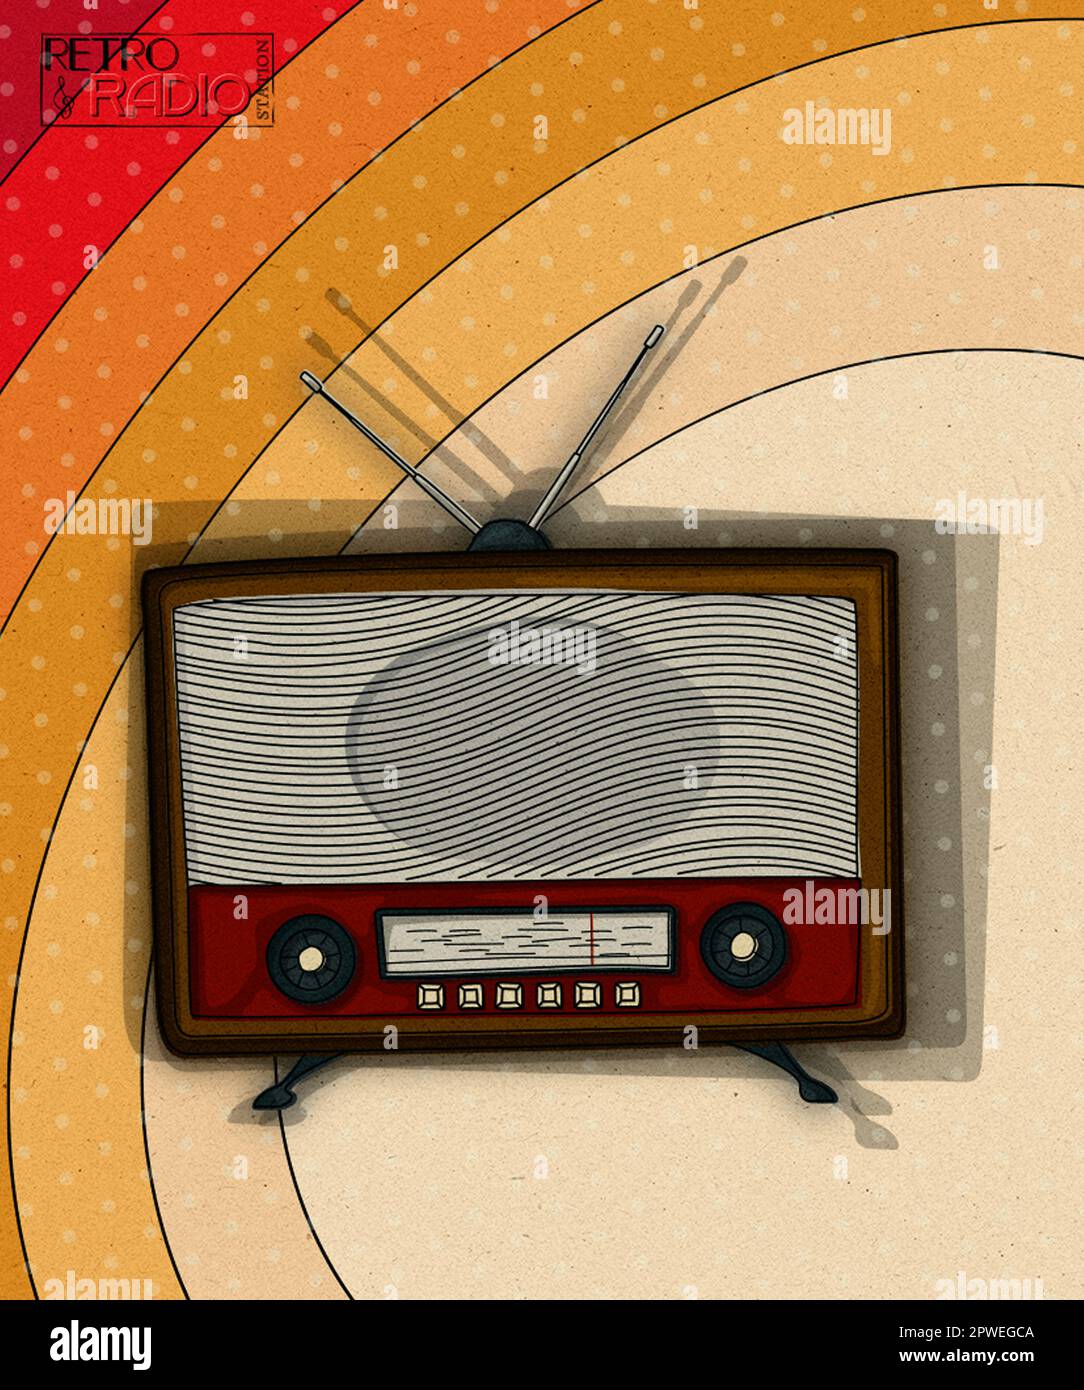 Retro radio background template design with vintage radio and room